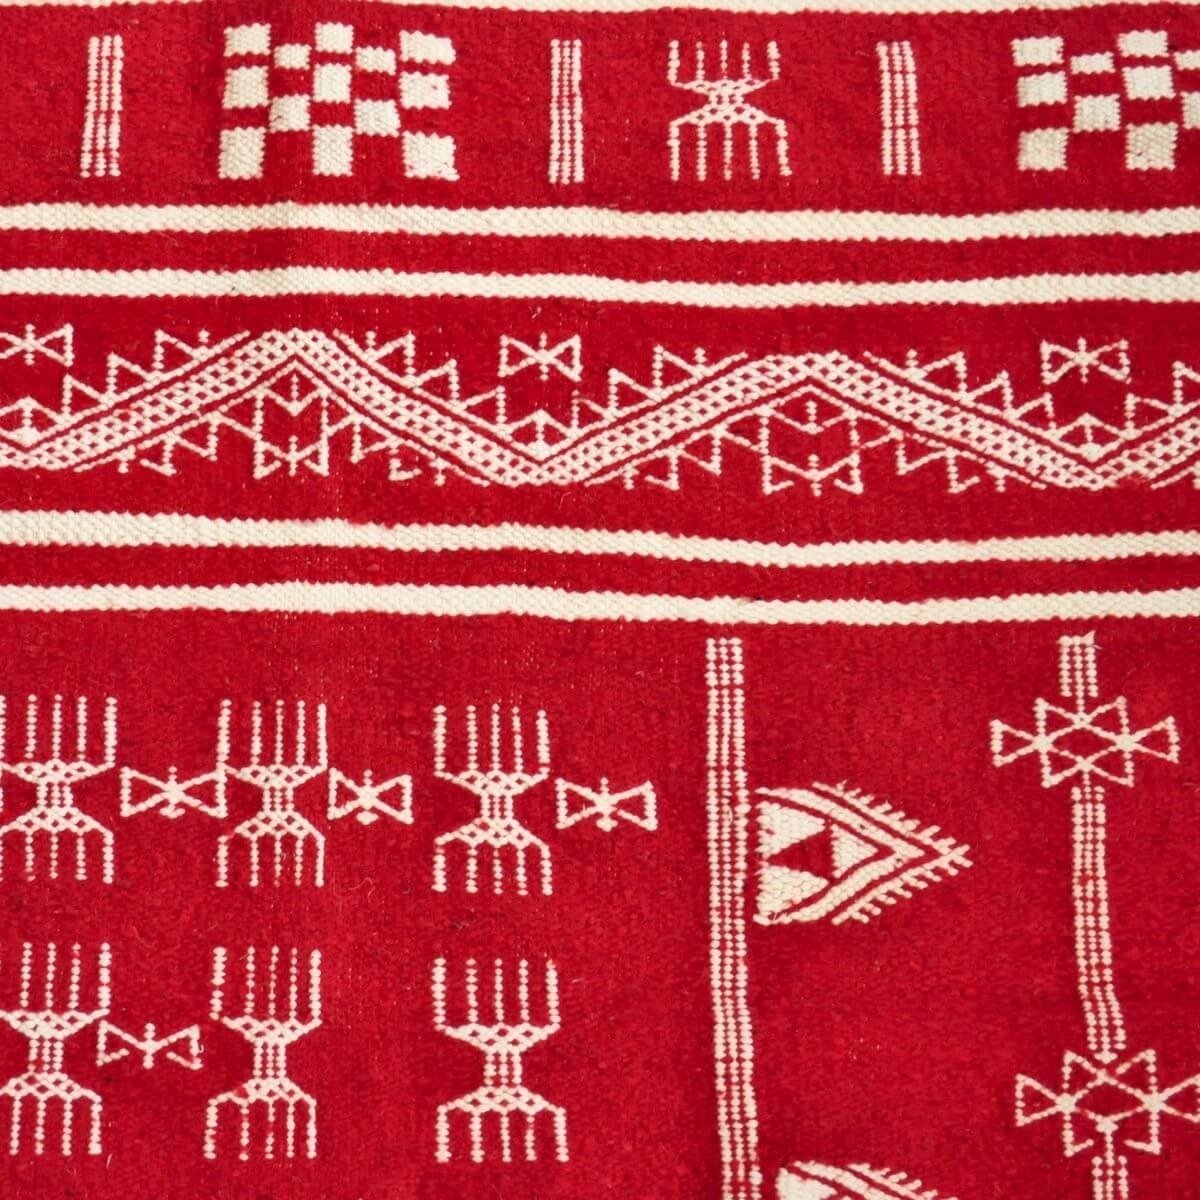 Berber tapijt Tapijt Kilim Granada 100x150 Rood (Handgeweven, Wol, Tunesië) Tunesisch kilimdeken, Marokkaanse stijl. Rechthoekig